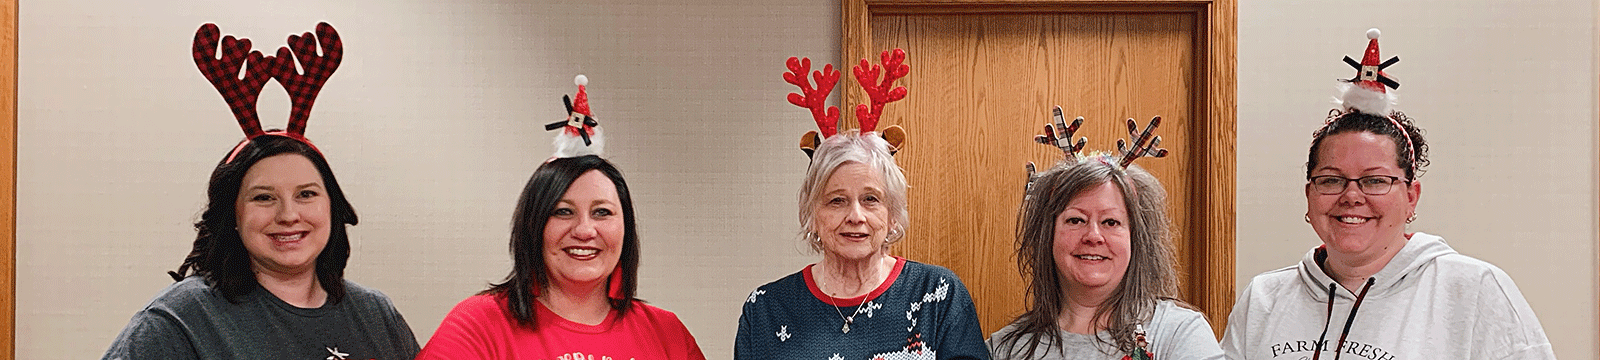 Women wearing reindeer antlers and Christmas antlers standing in a row.